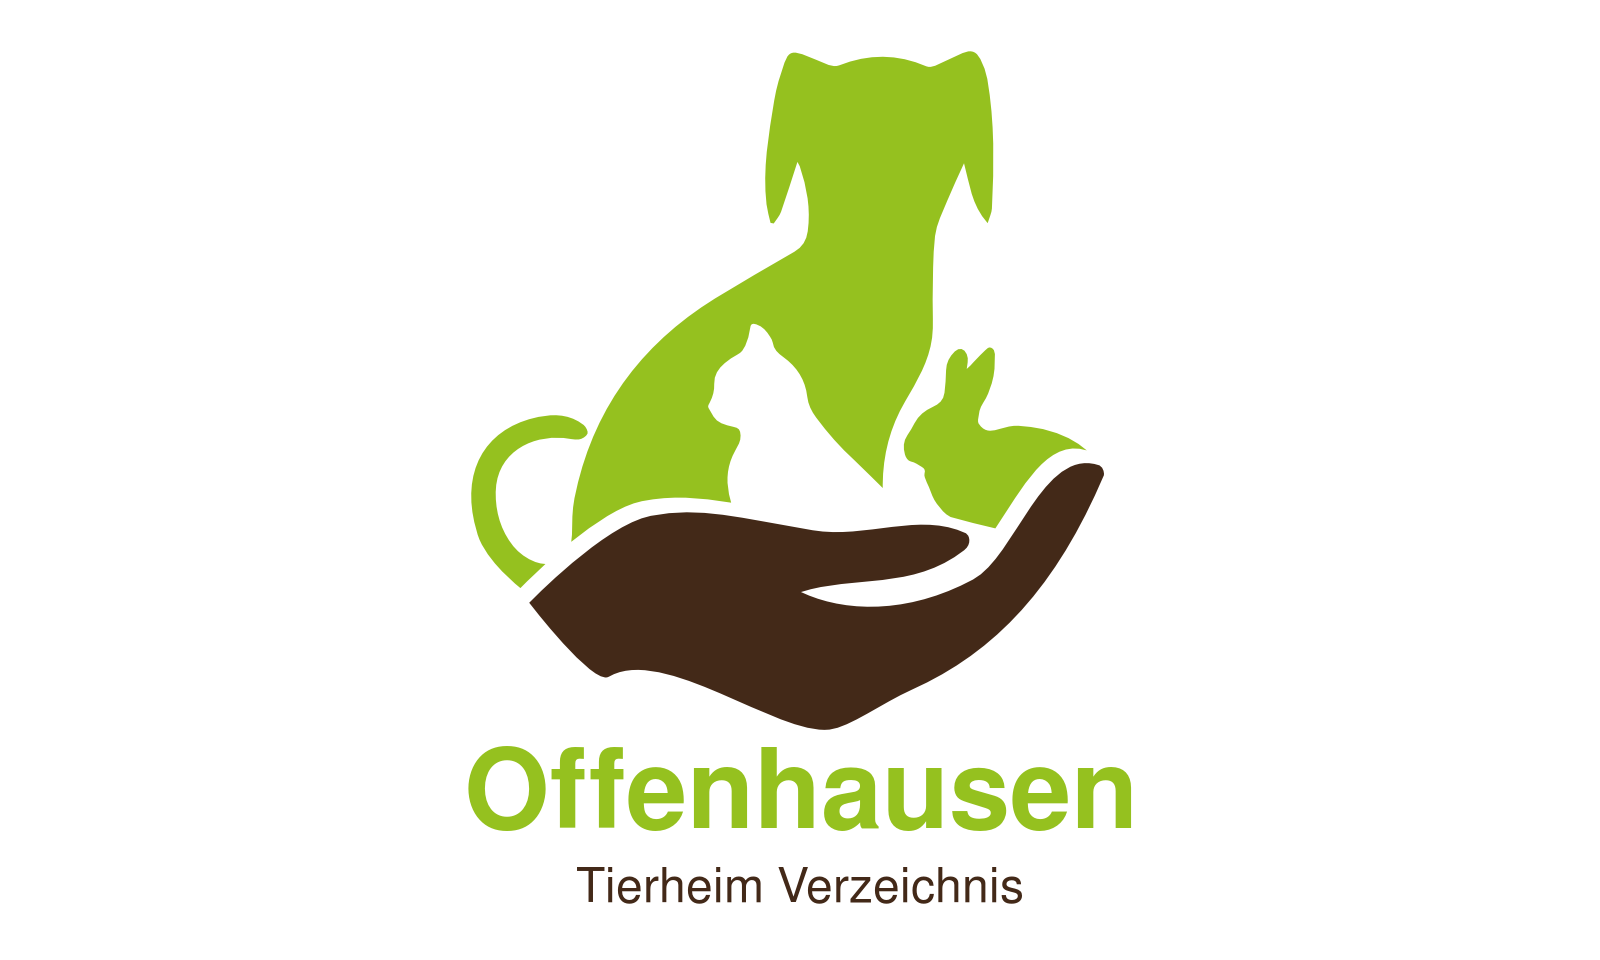 Tierheim Offenhausen